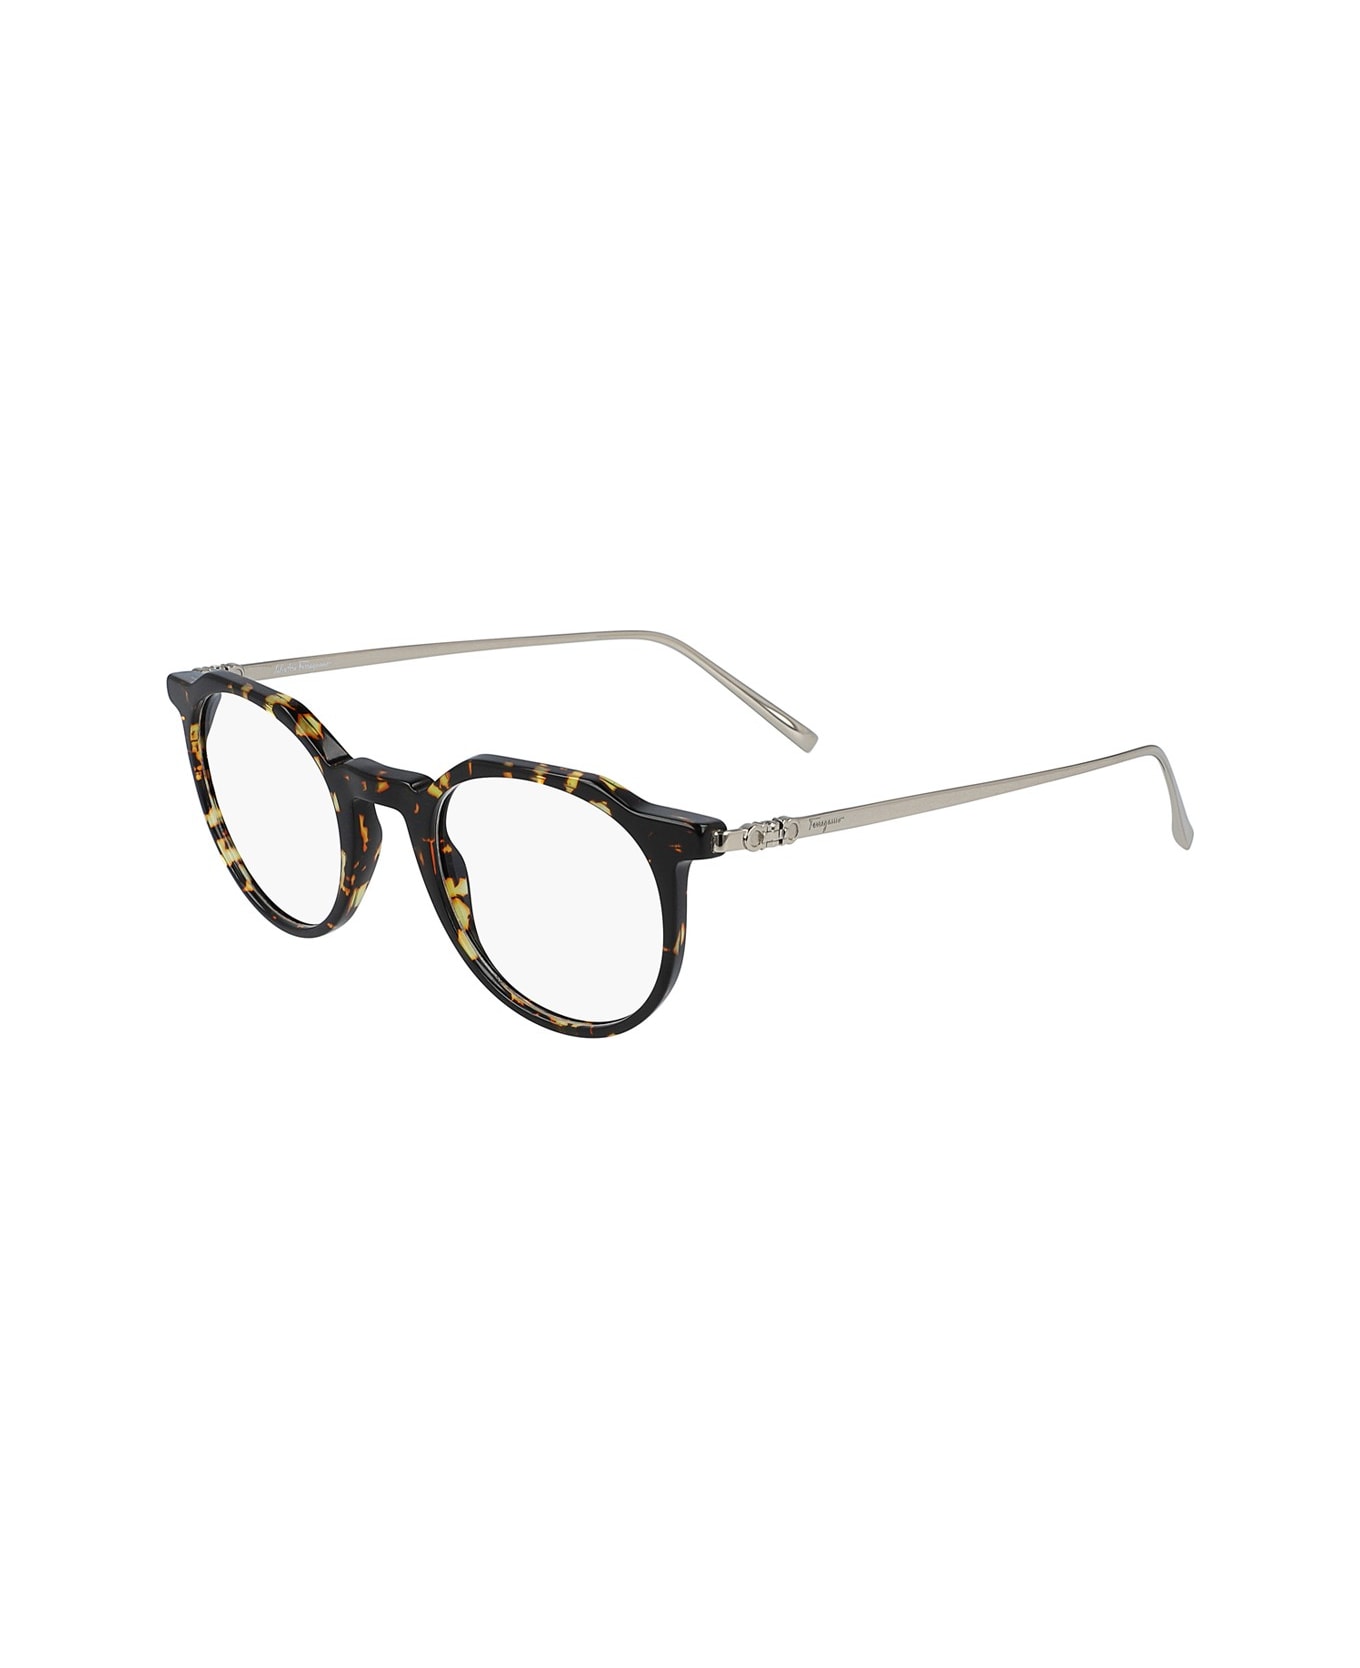 Salvatore Ferragamo Eyewear Sf2845 Glasses - Marrone